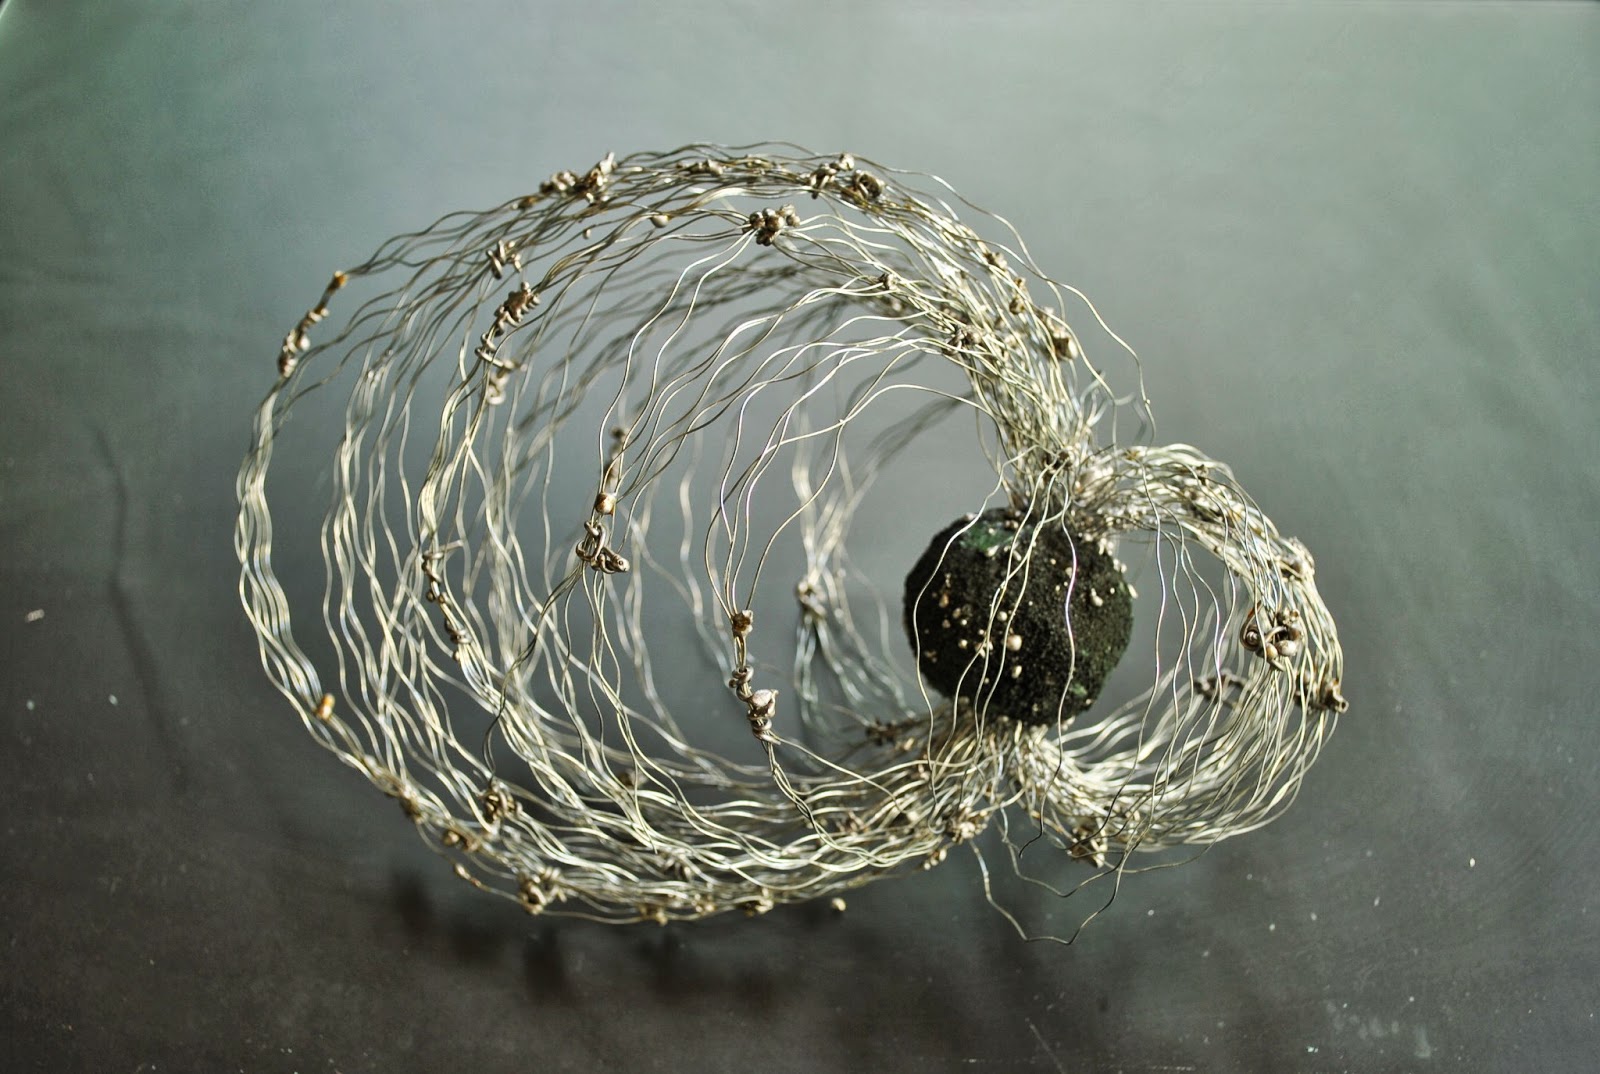 Maja Taneva – Metal wire sculptures (Macedonia)